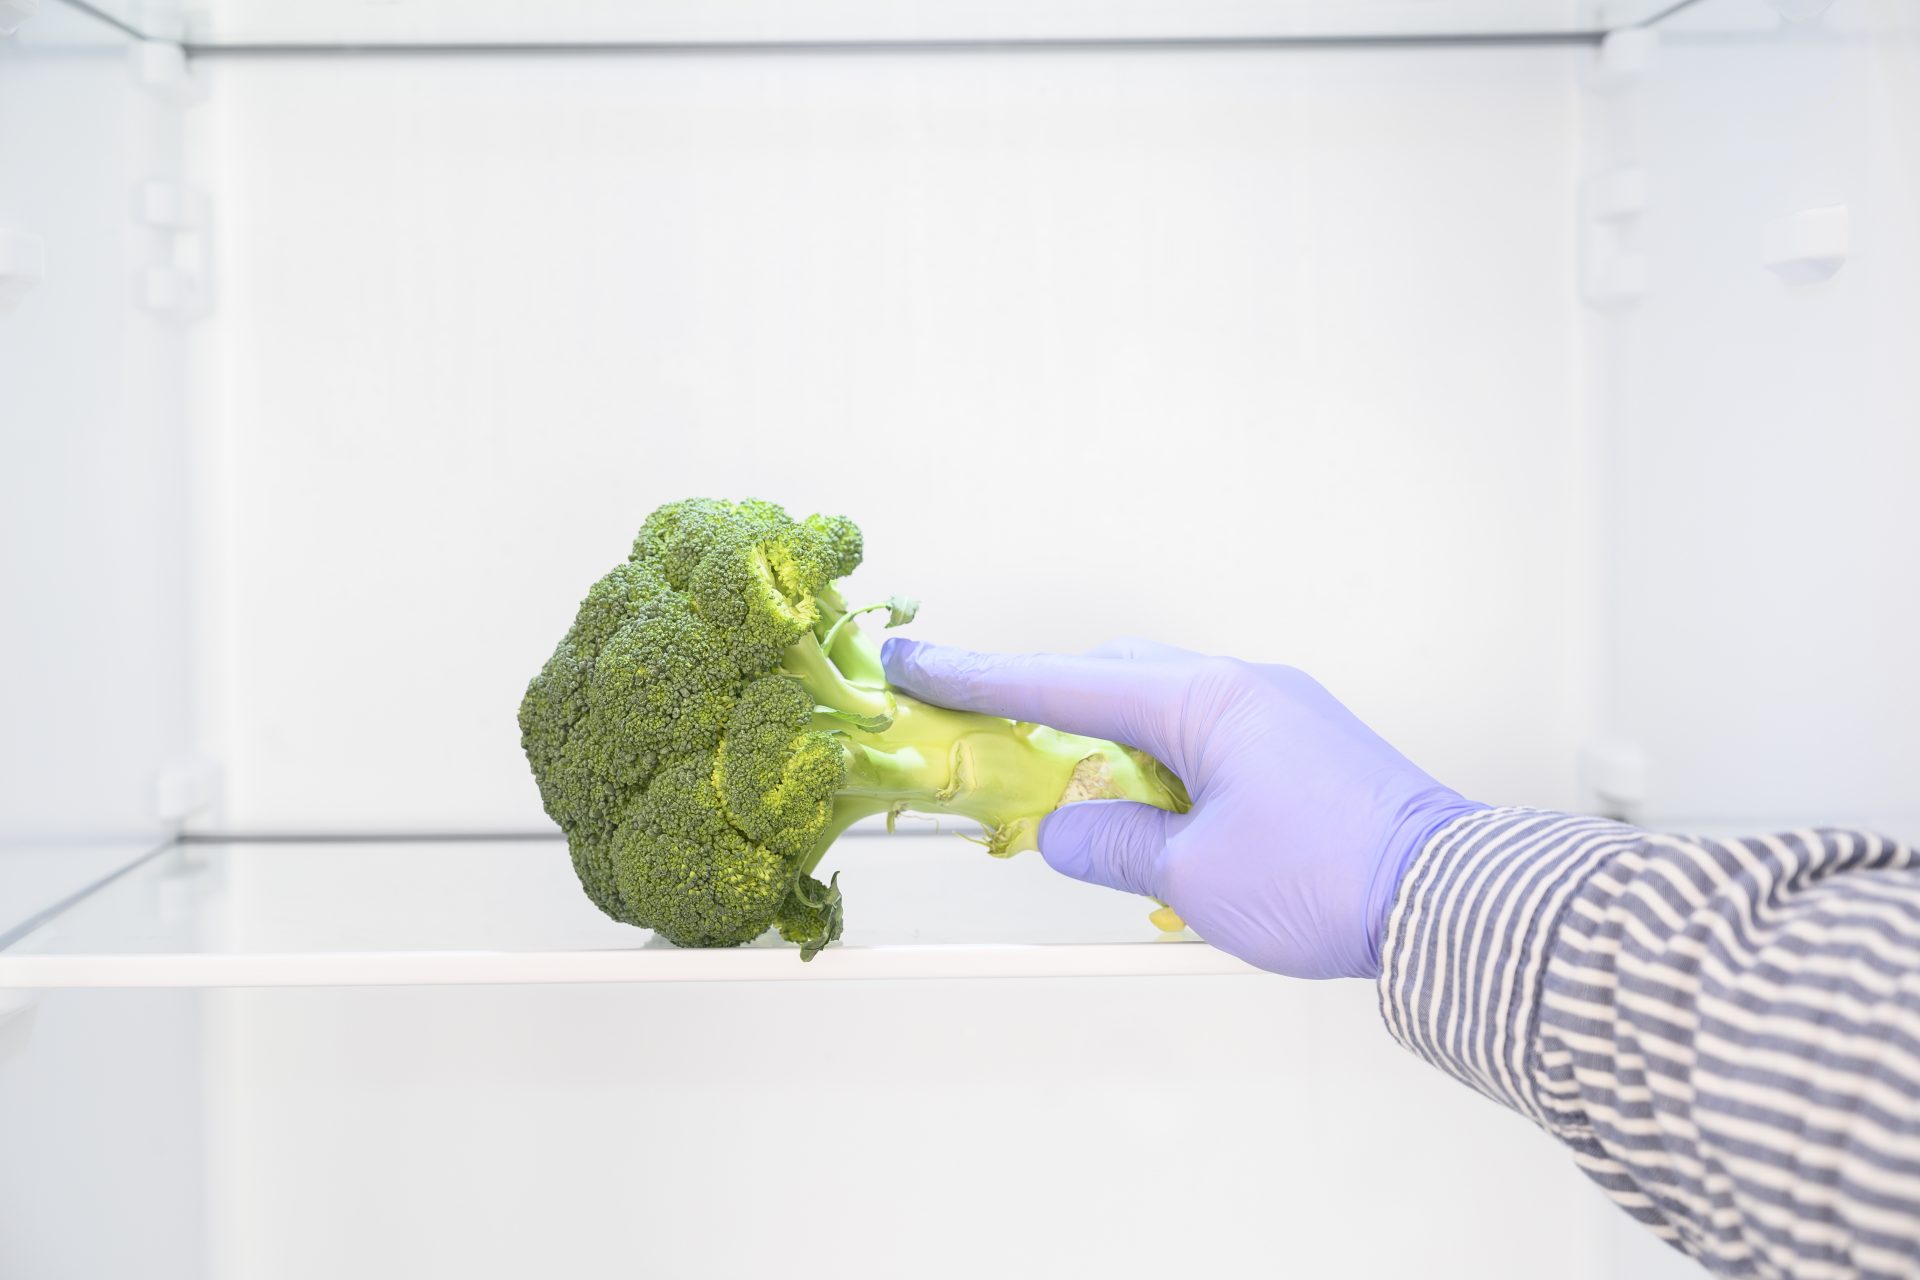 Broccoli and cauliflower: fridge for the win